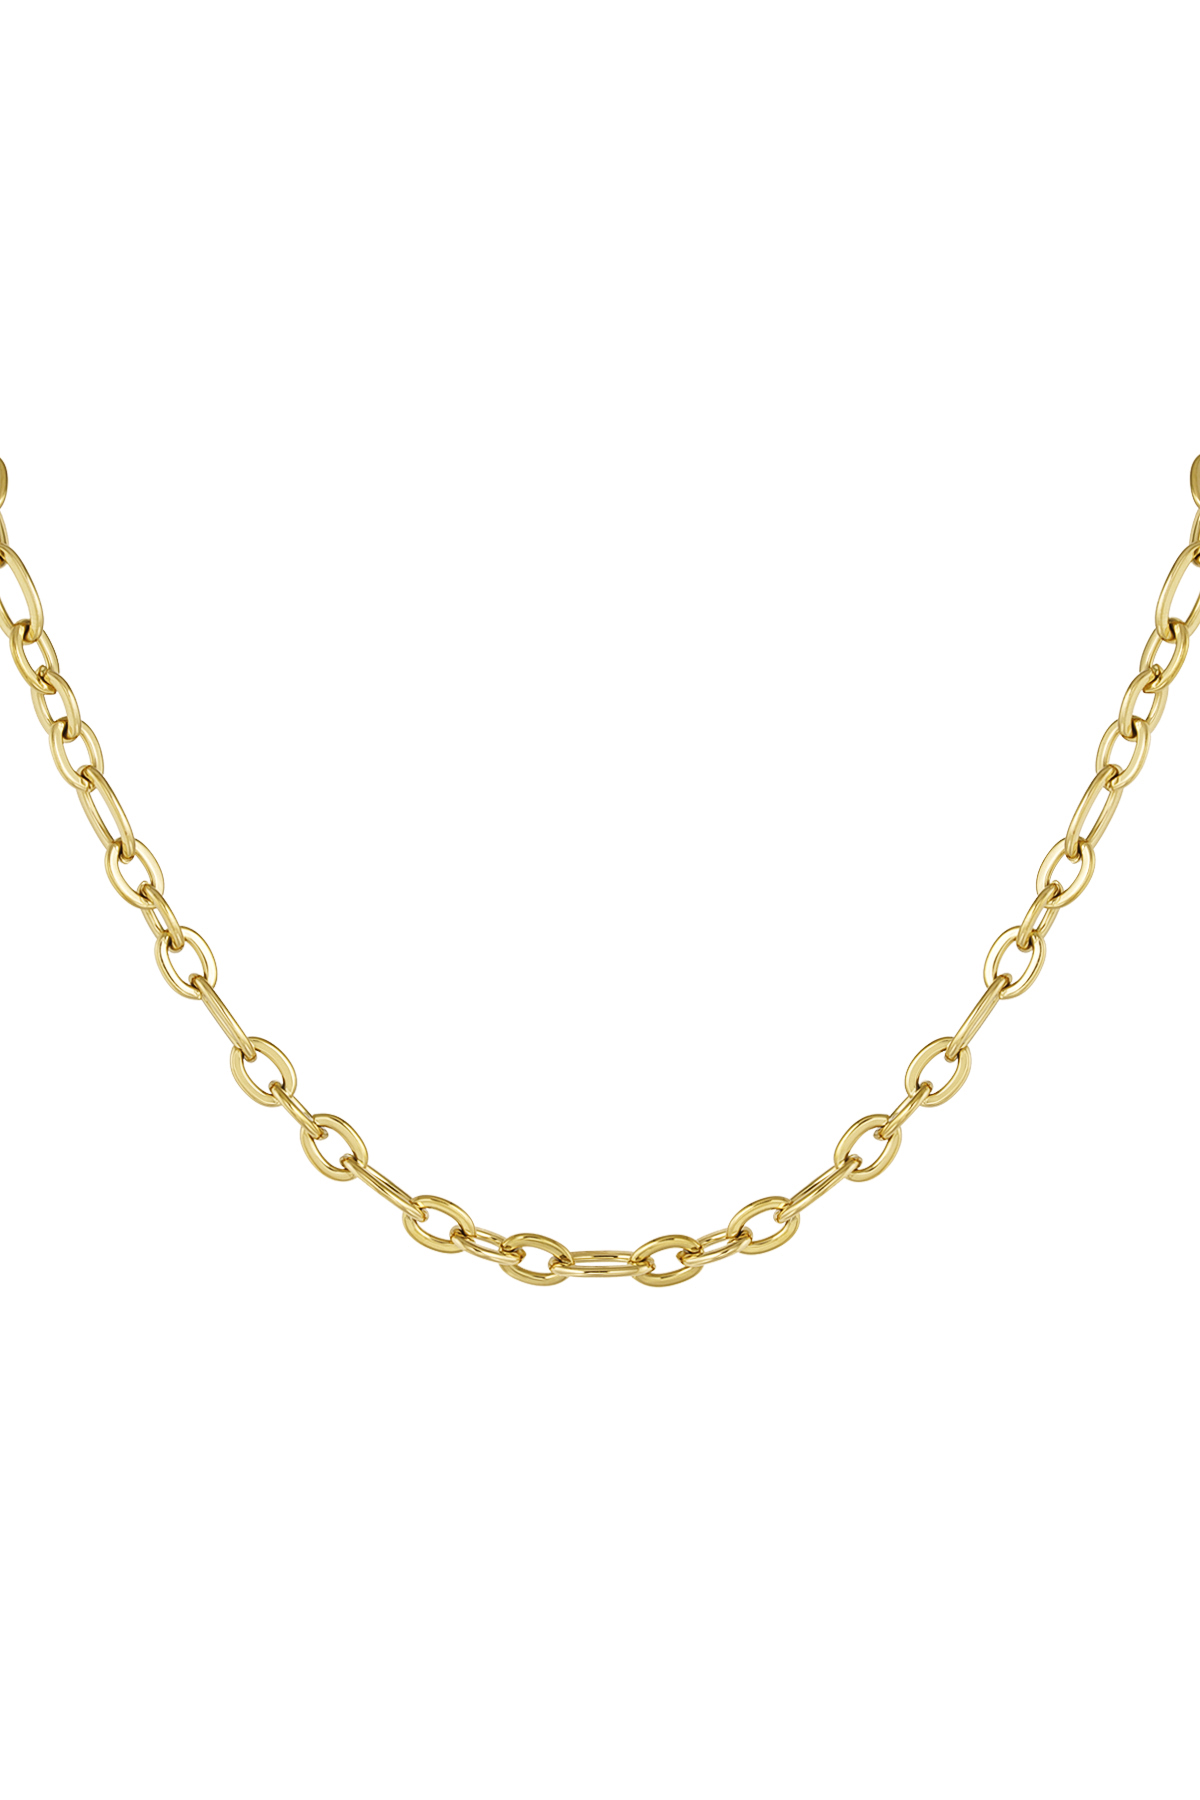 Chain basic link - gold 